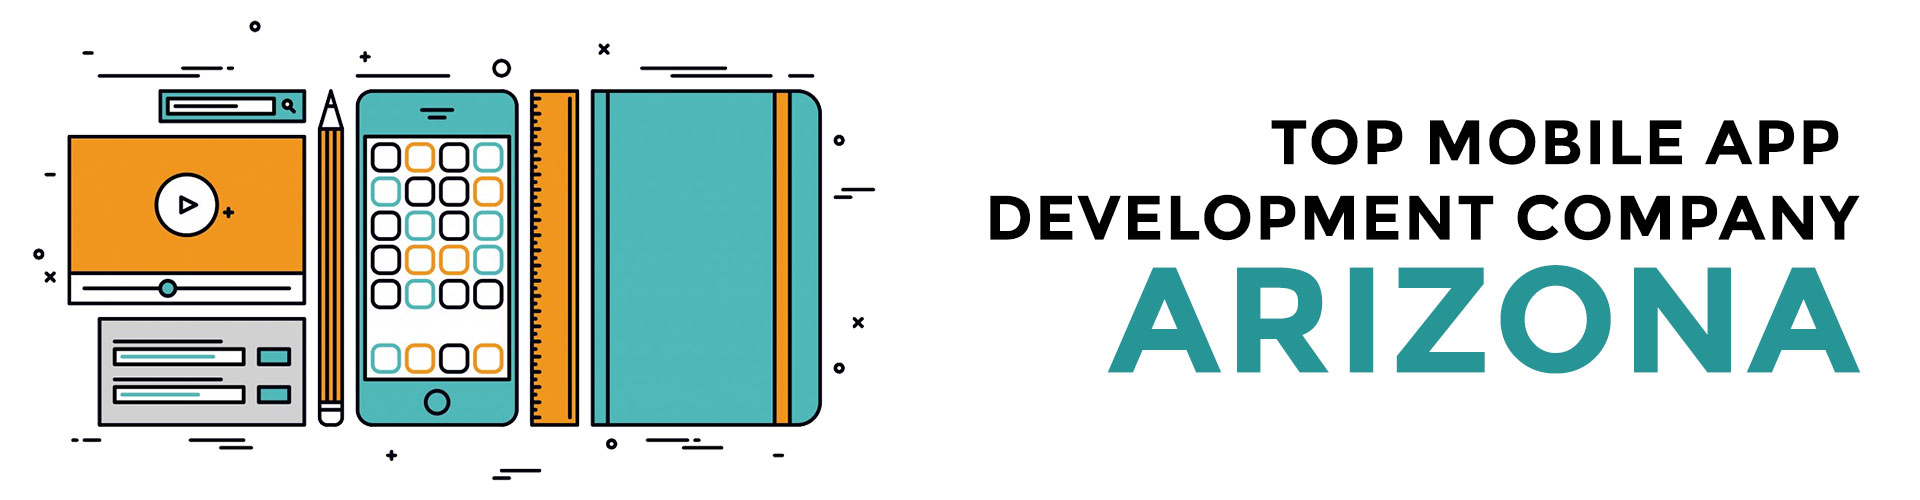 top mobile app development company arizona